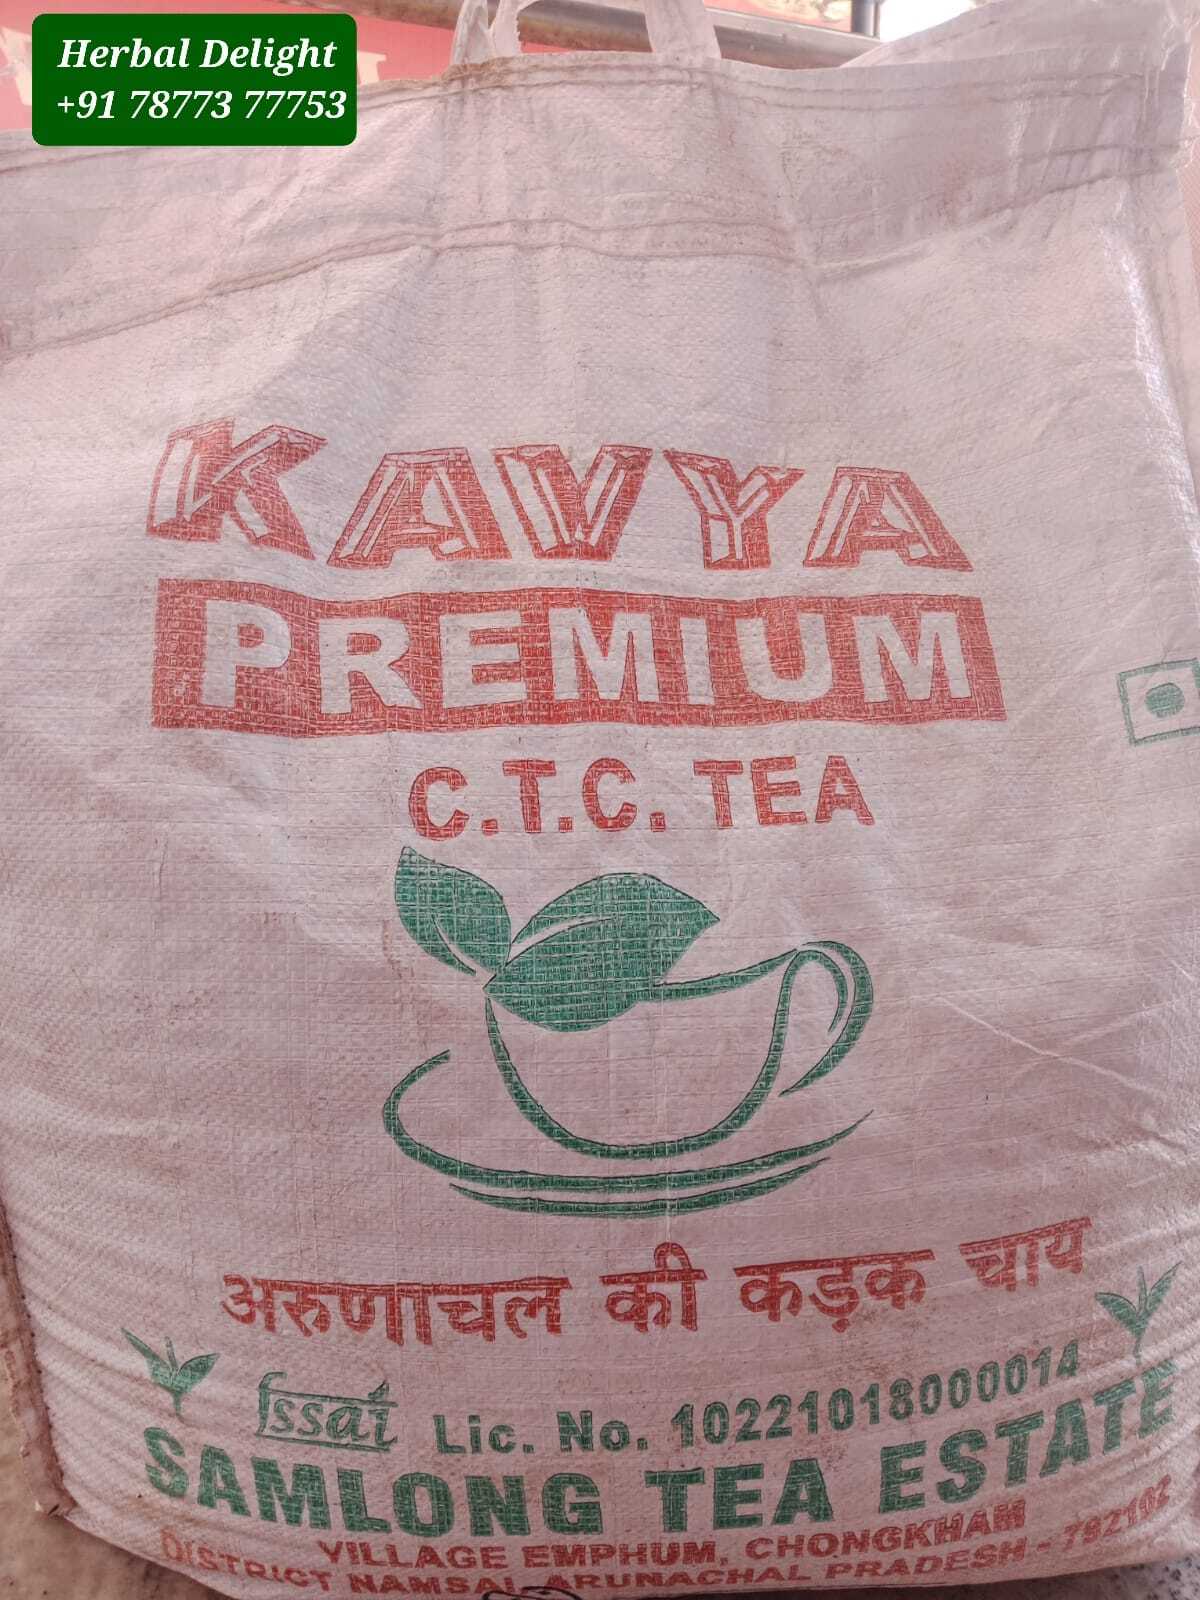 Kavya CTC Premium Tea